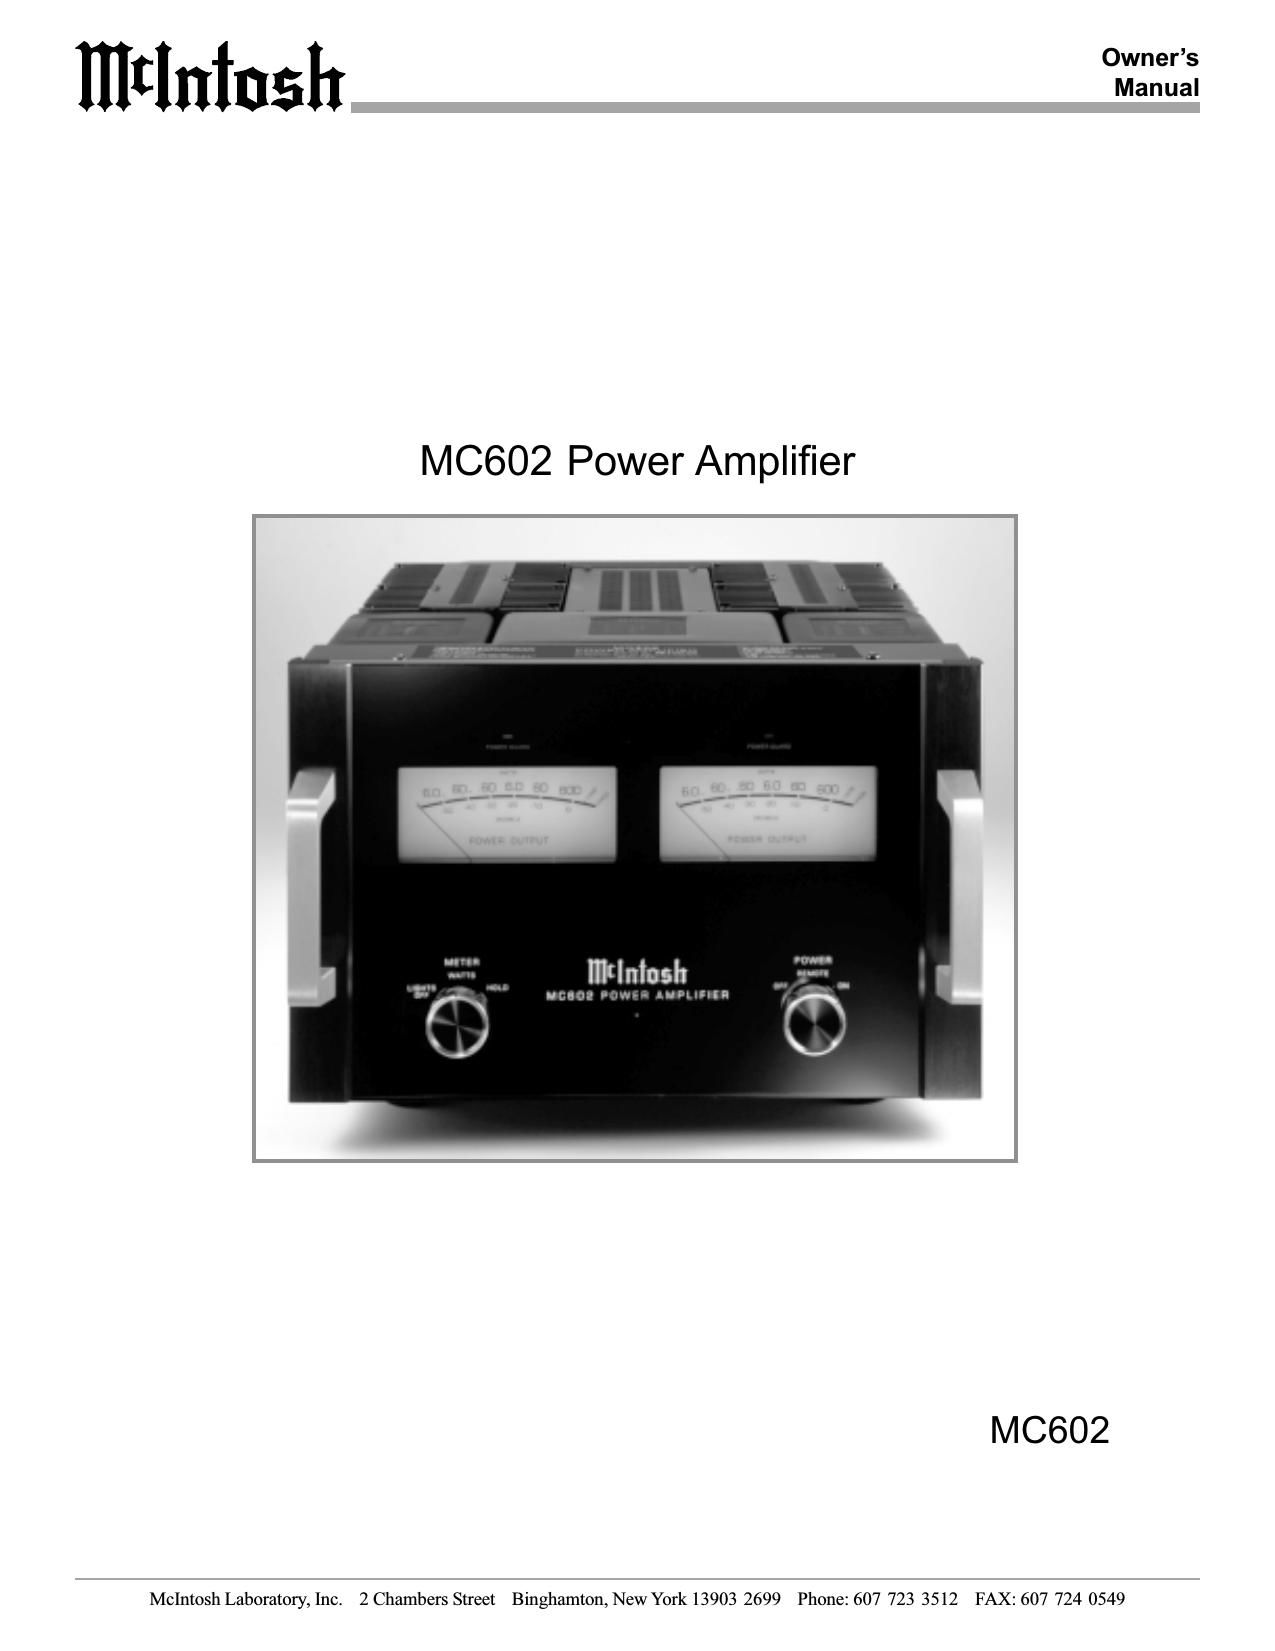 McIntosh MC 602 Owners Manual